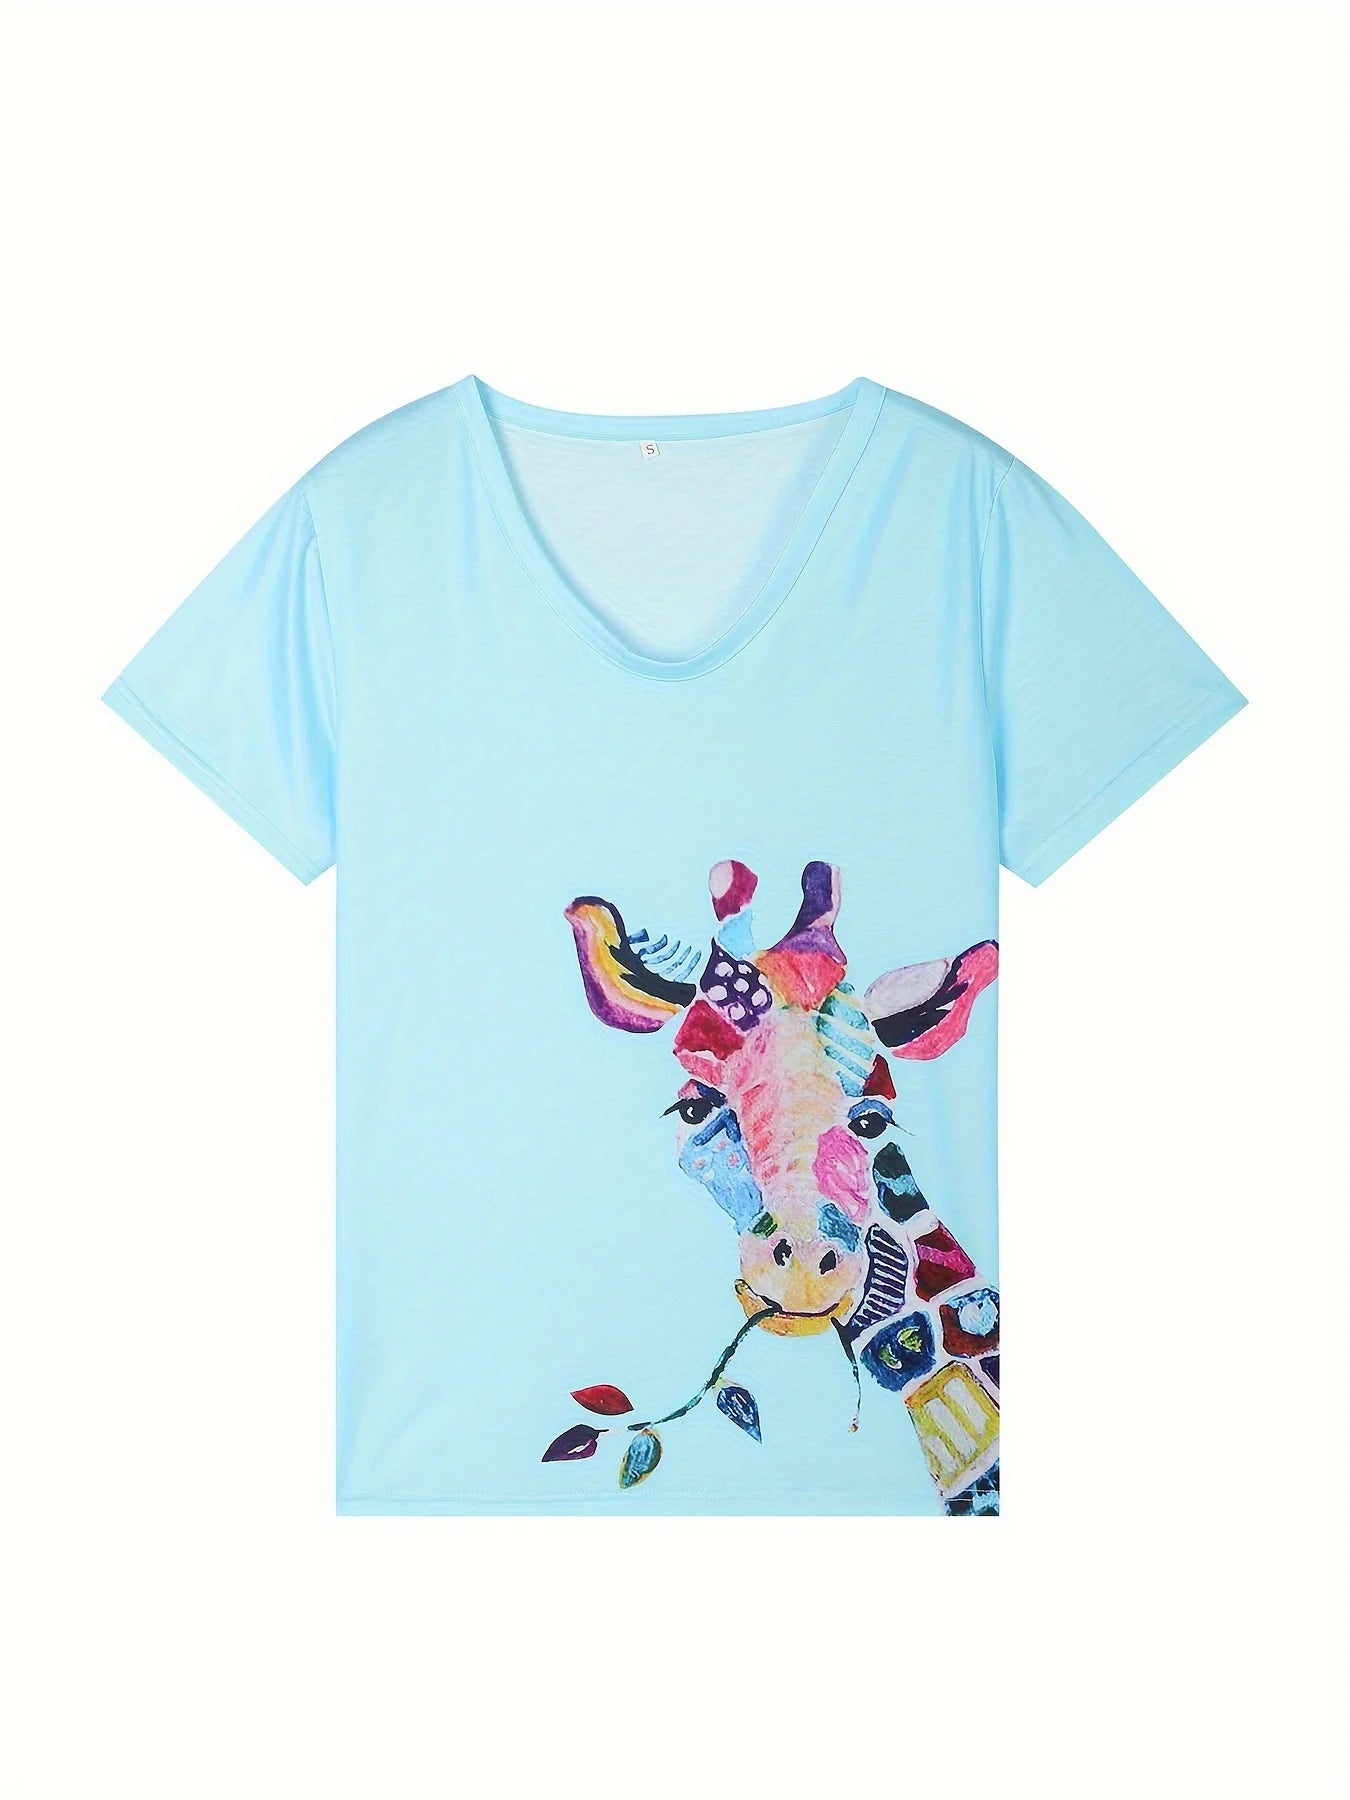 Women Giraffe Print Women's T-Shirt Oversized T-Shirt Top Women Clothing Design Short Sleeve Plus Size Blouse